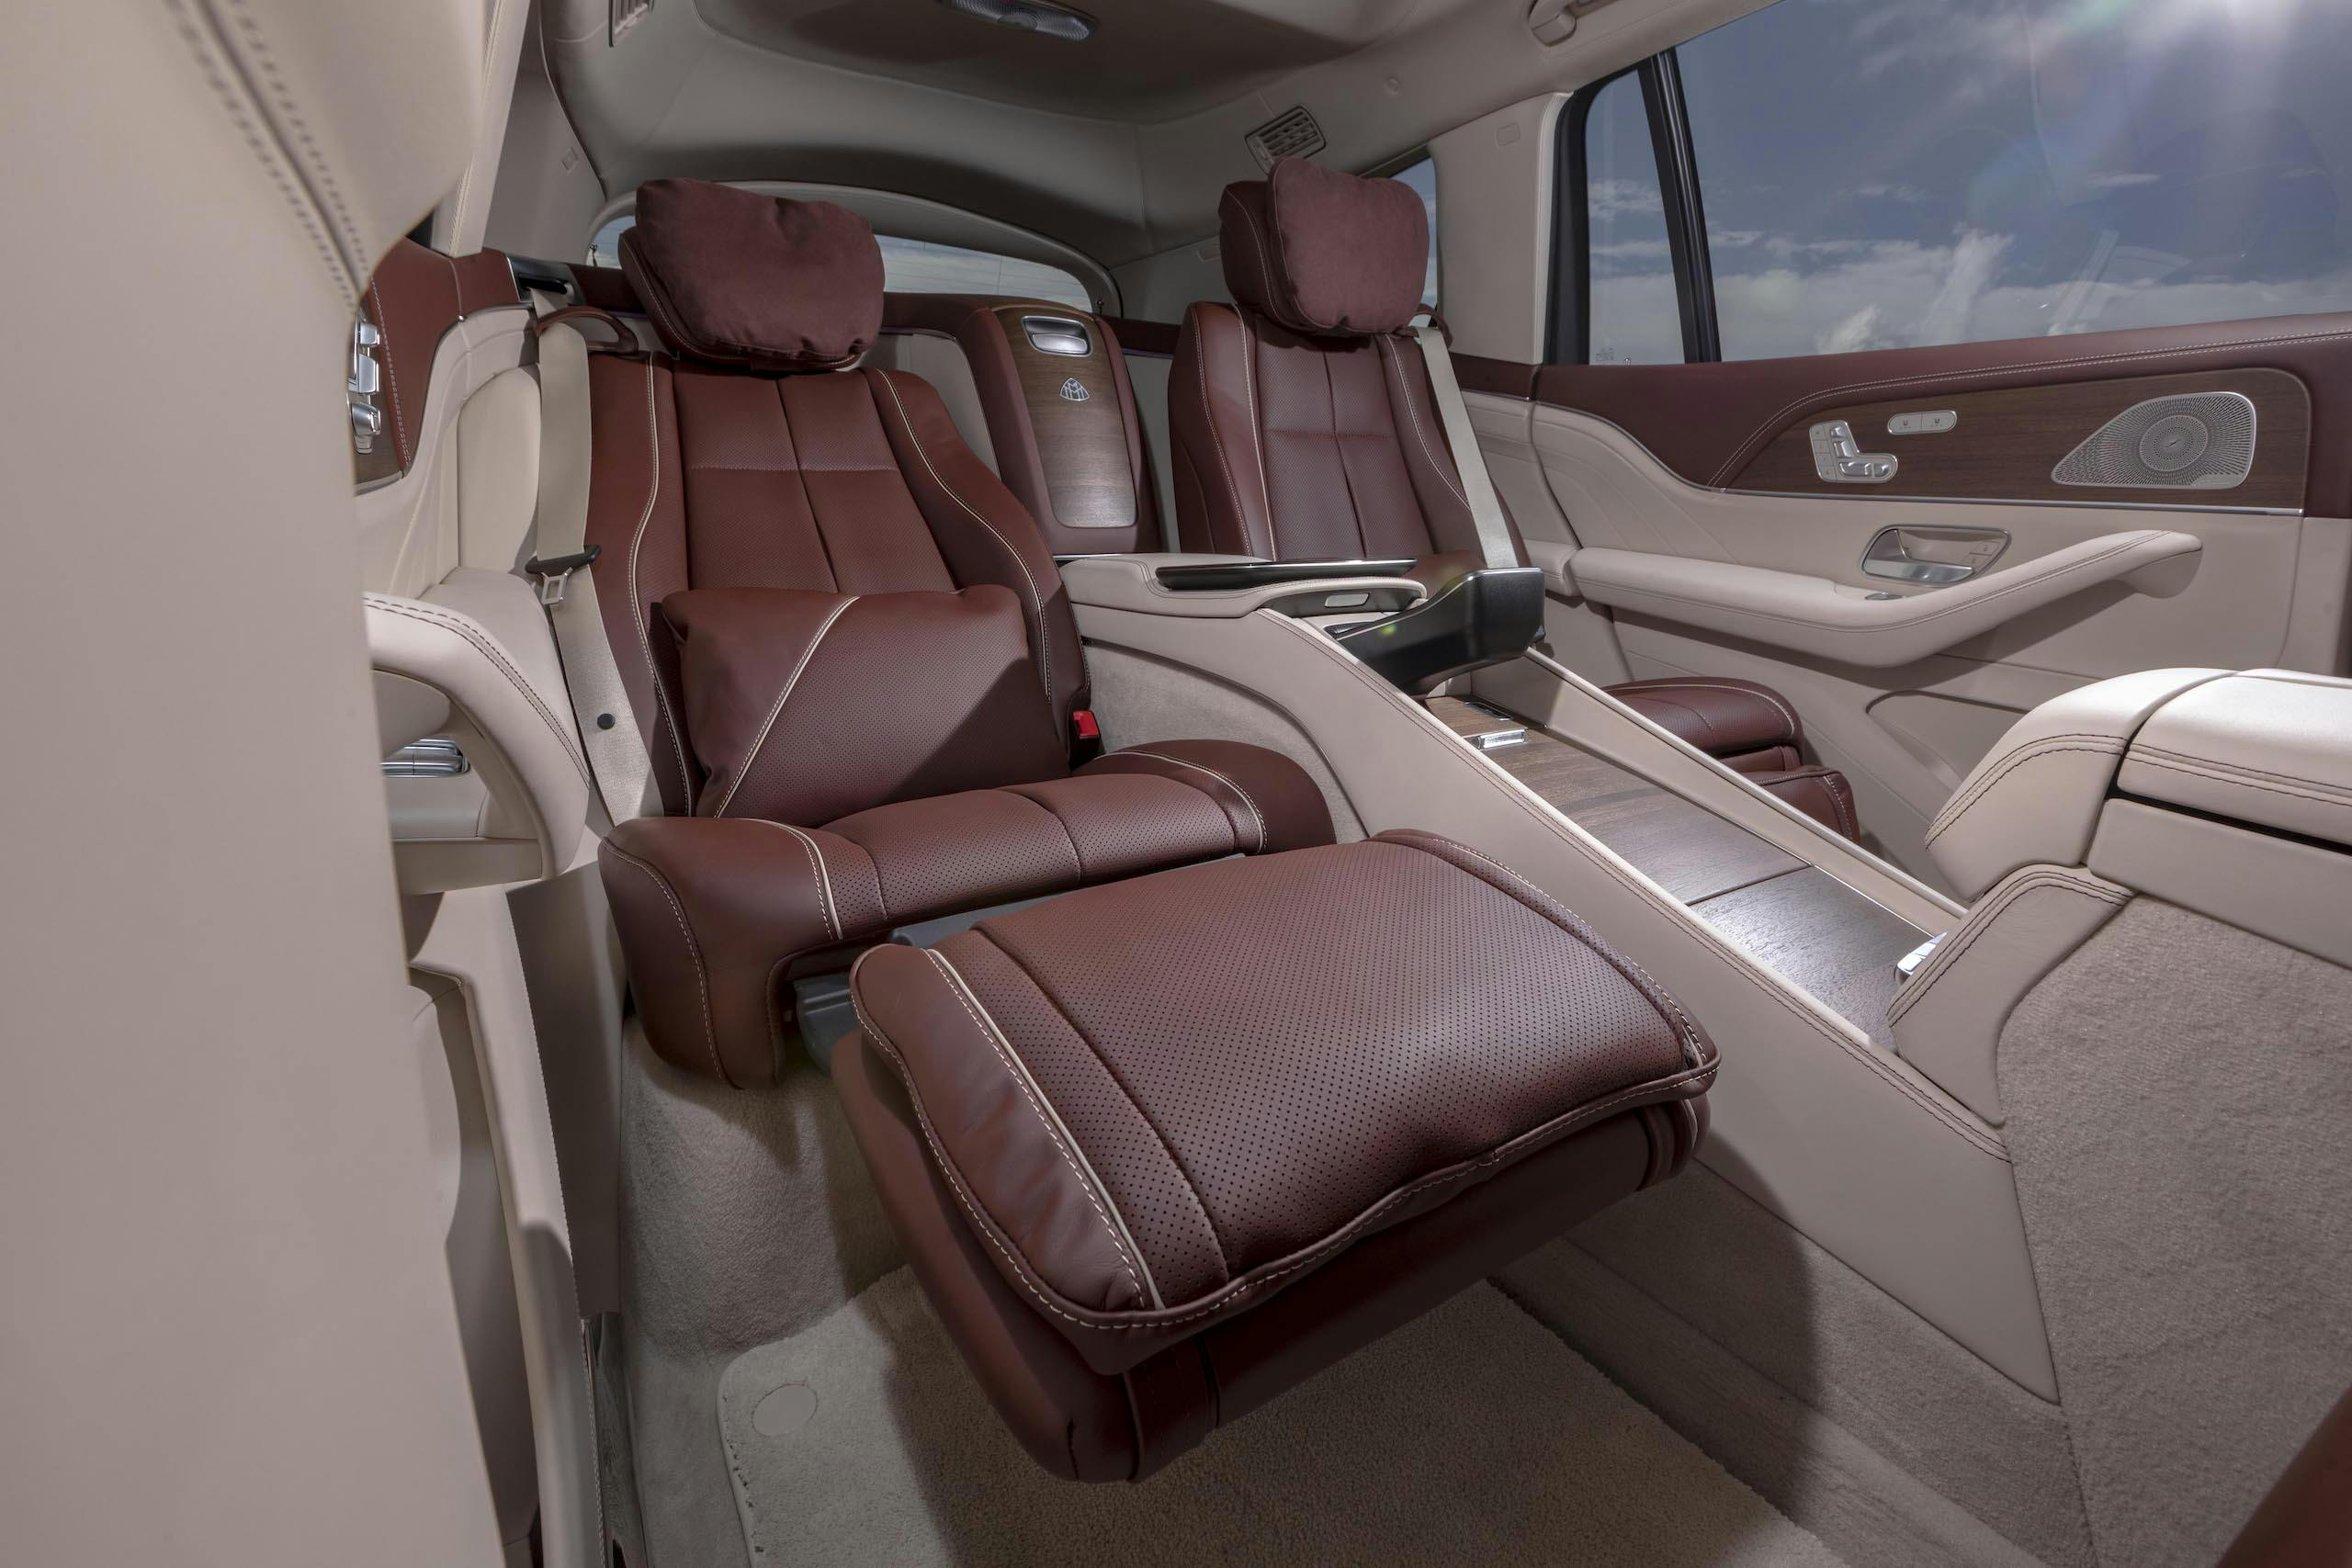 Mercedes-Maybach GLS 600 interior rear seating area